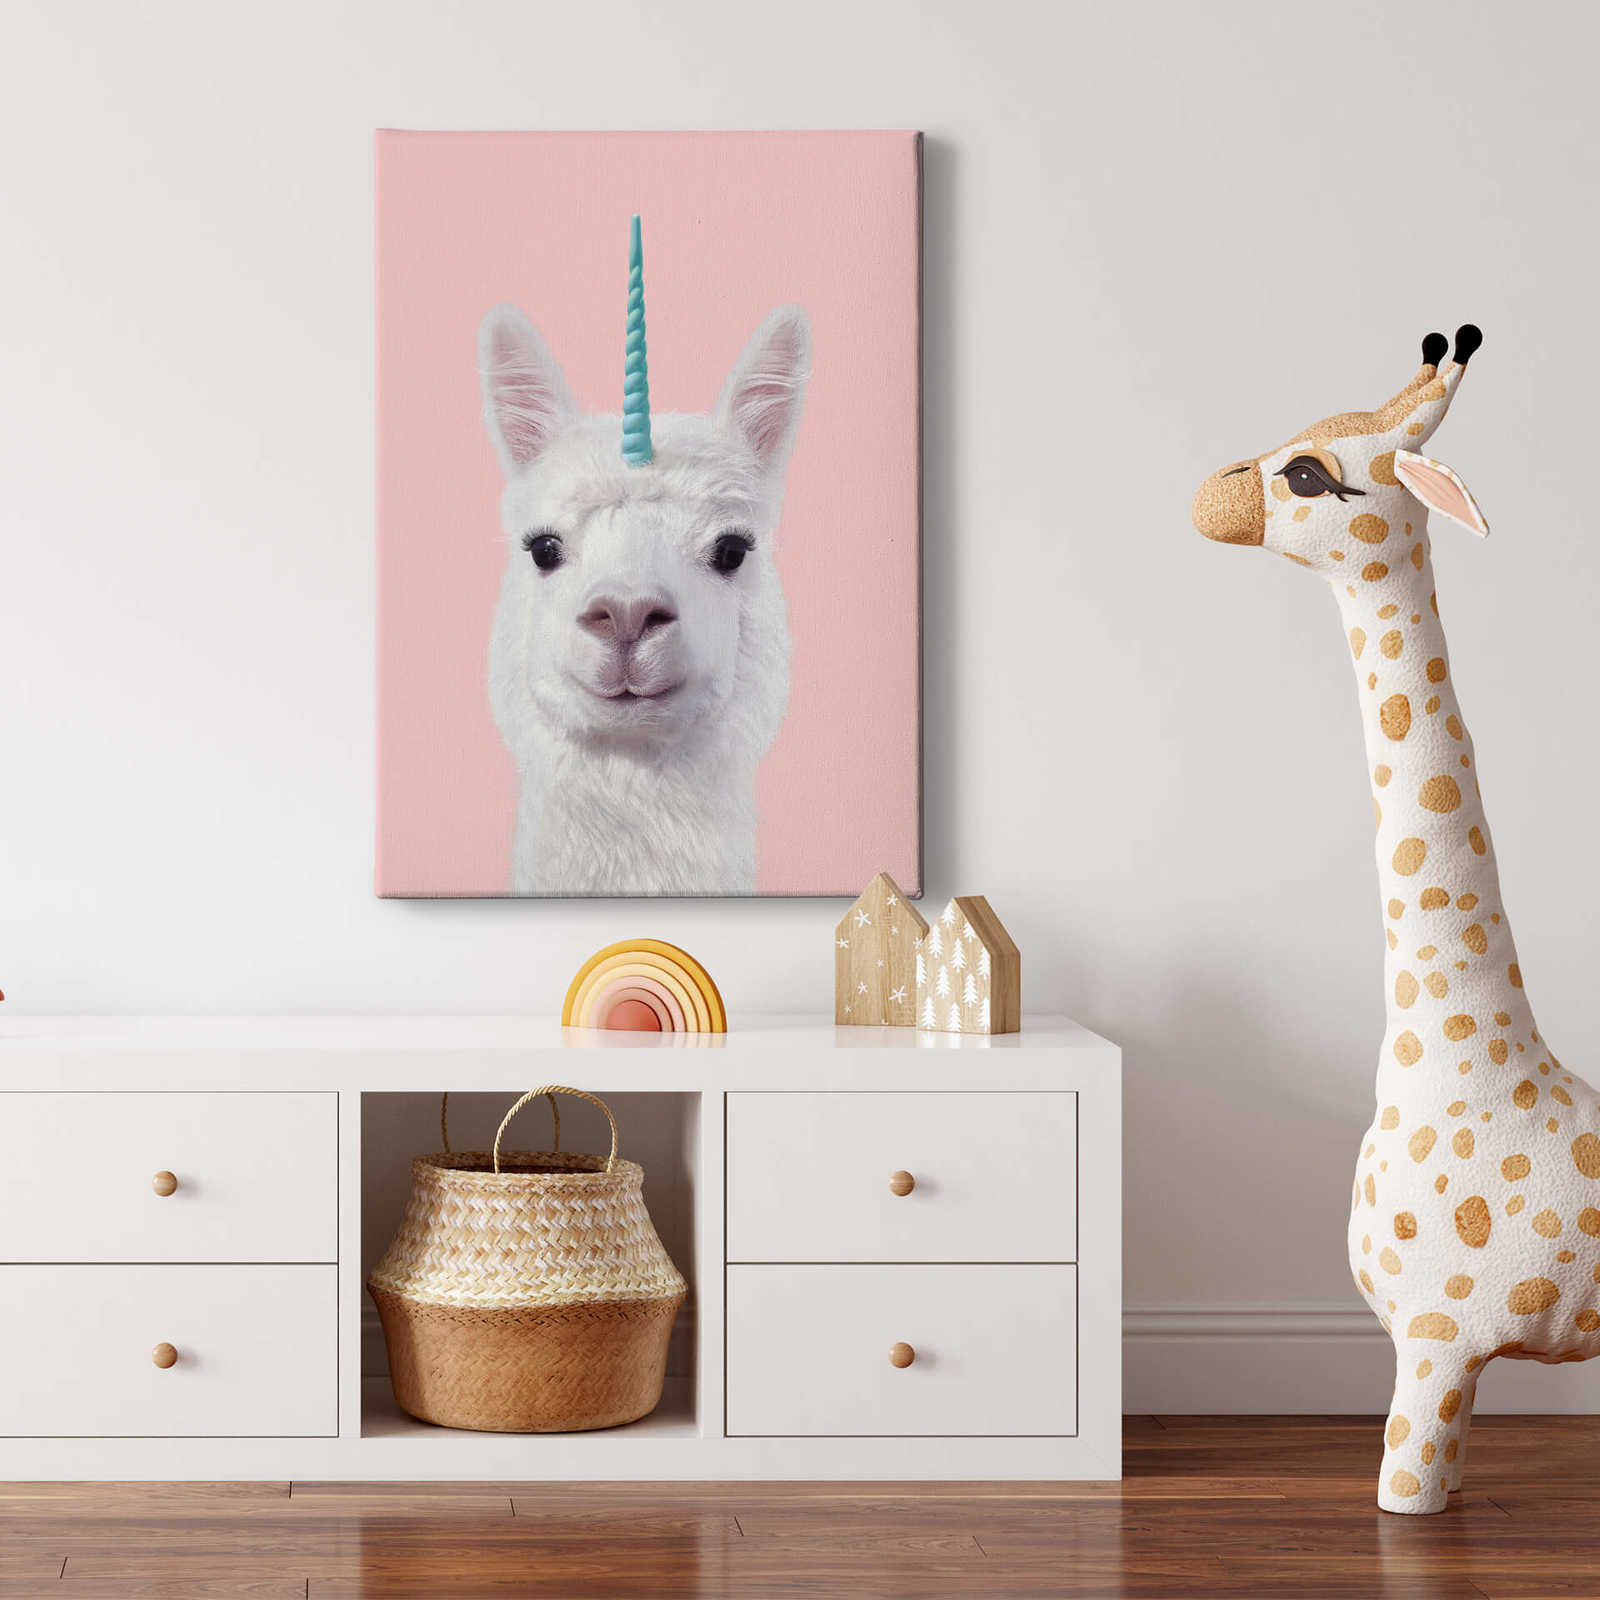             Canvas print alpaca unicorn by Fuentes – pink, white
        